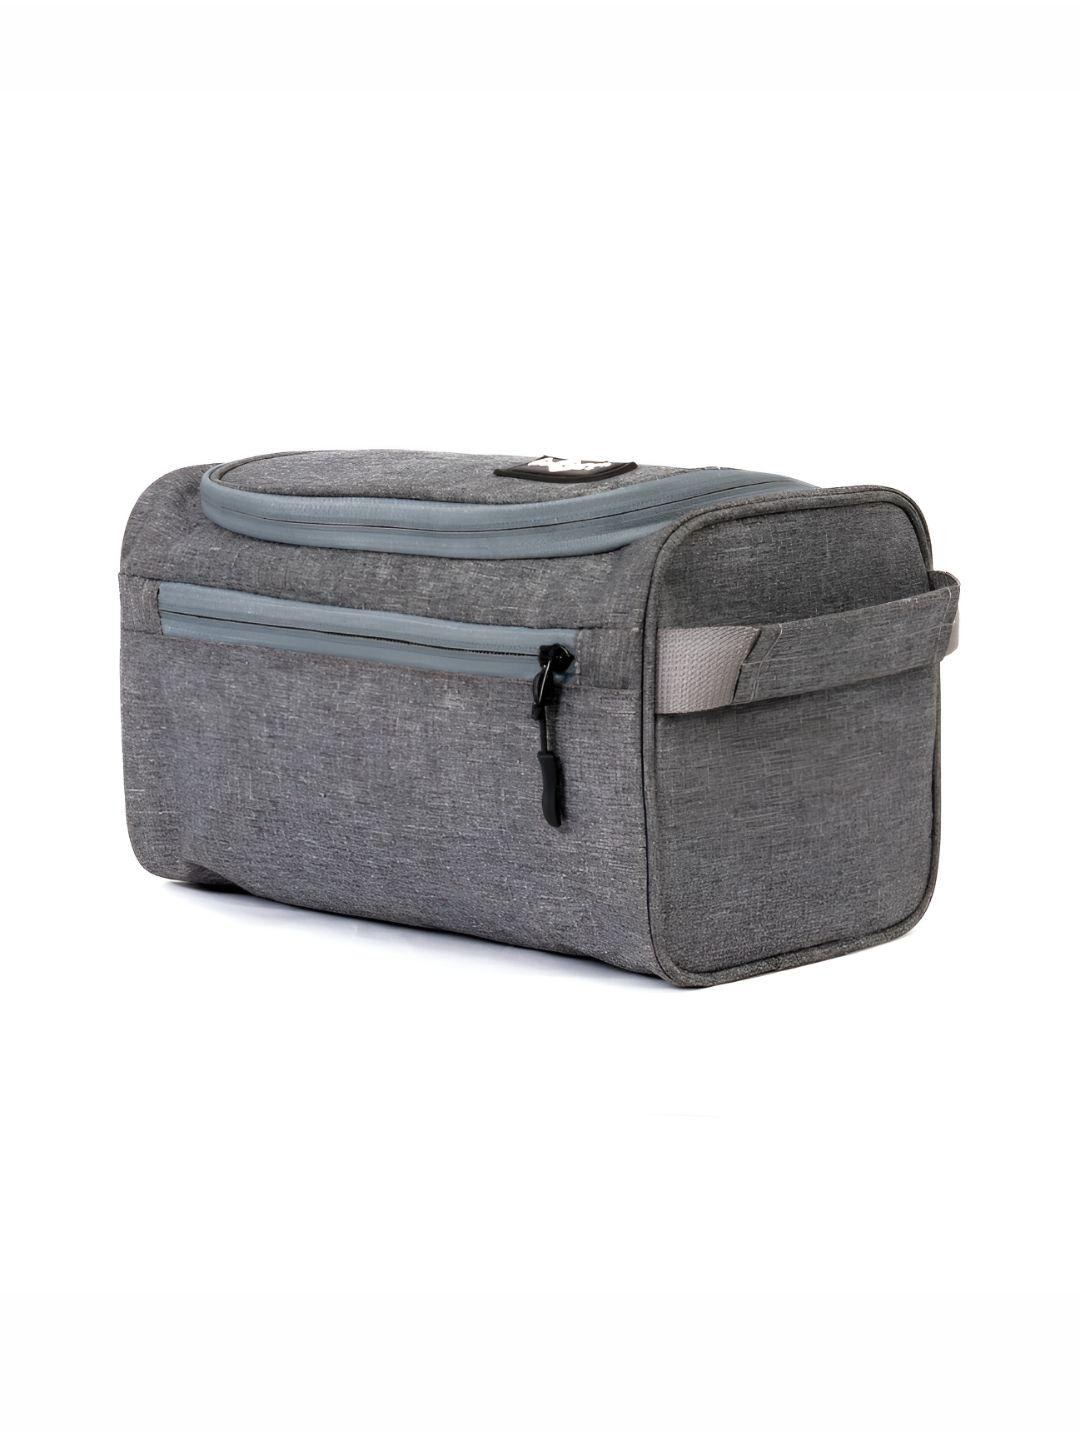 urbanfix grey reusable multi utility pouch travel accessory